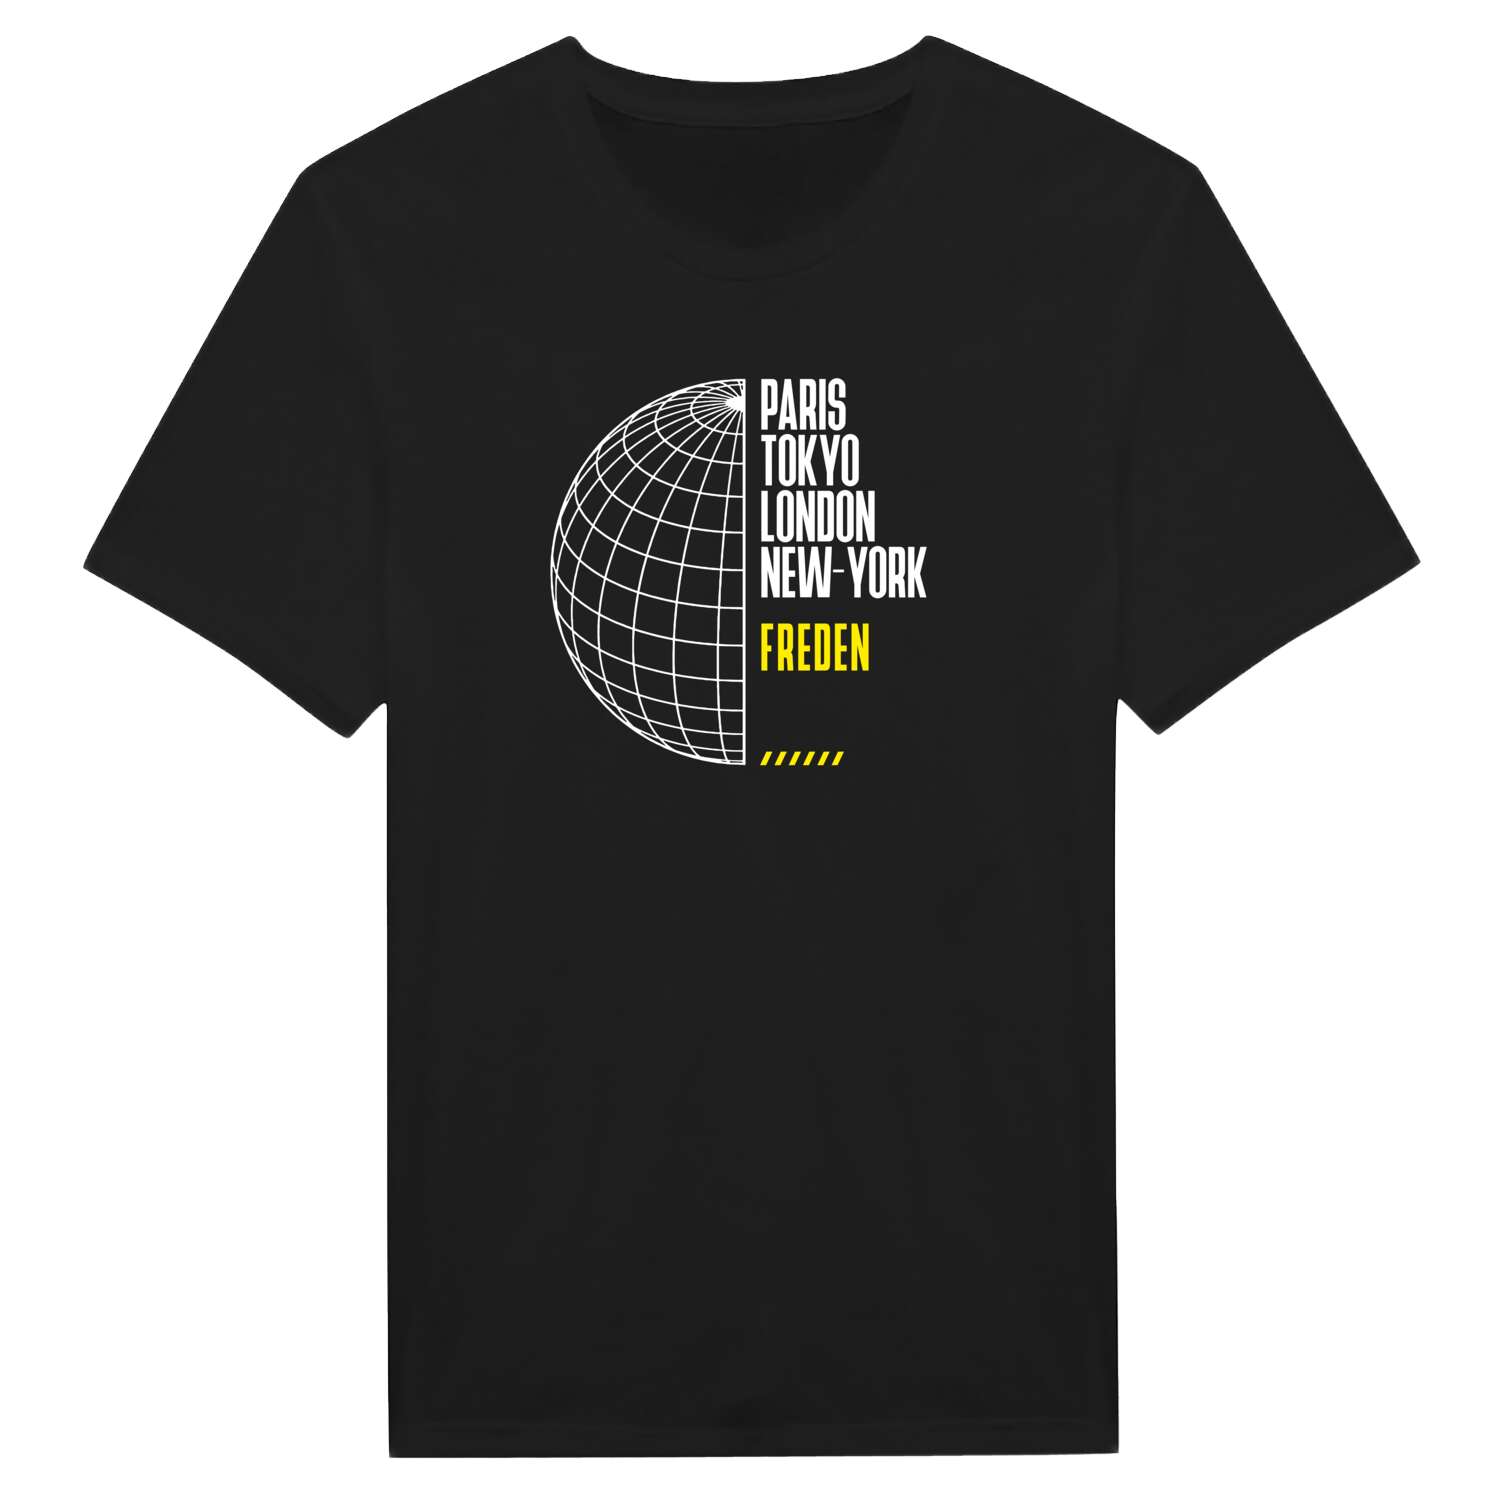 Freden T-Shirt »Paris Tokyo London«